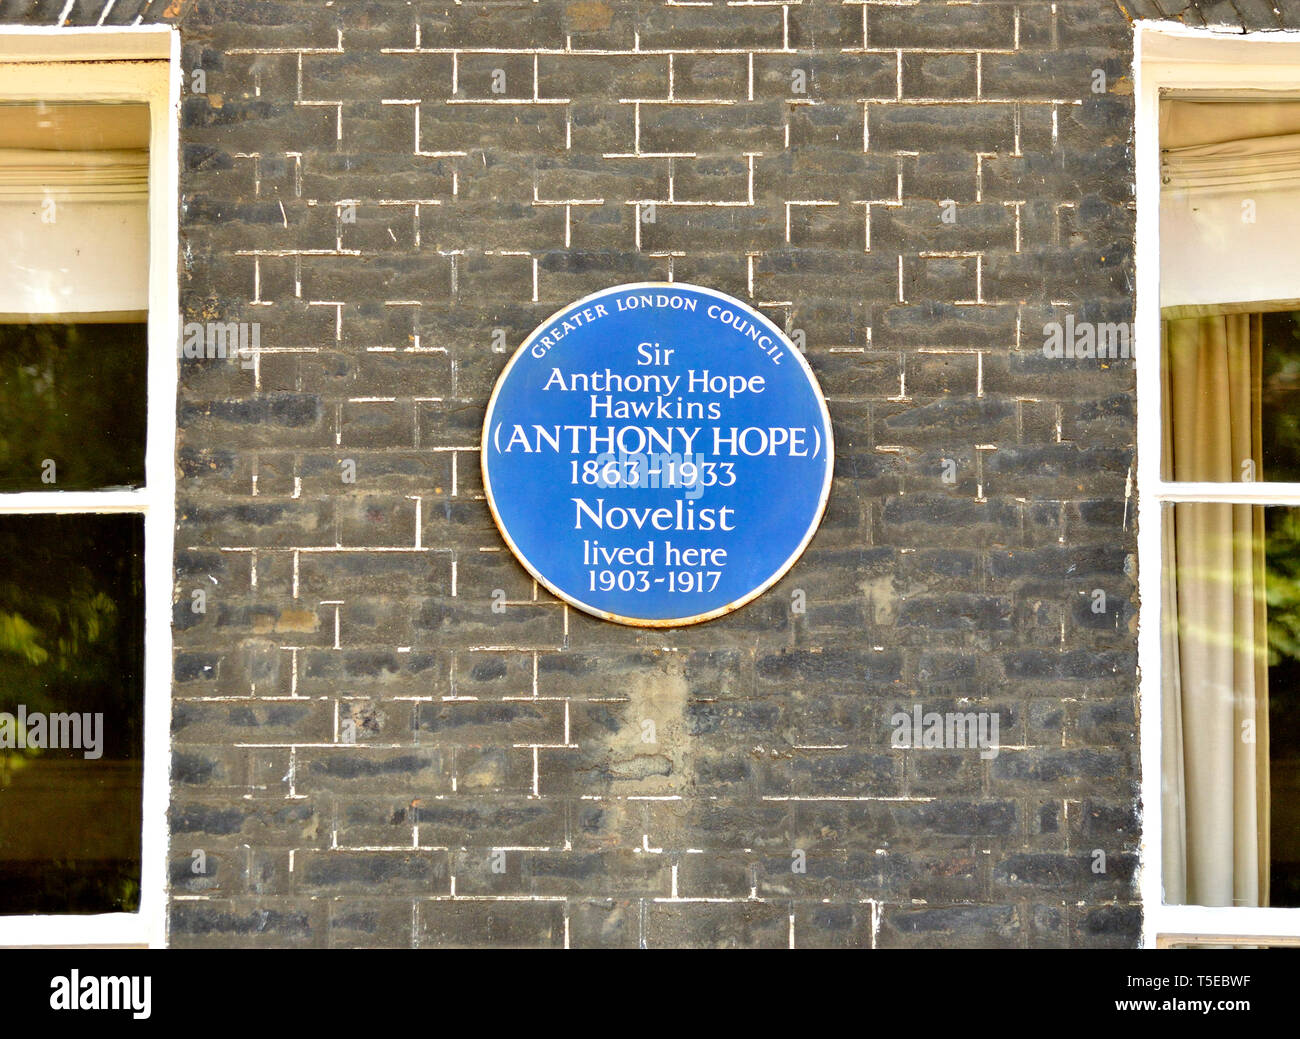 London, England, UK. Commemorative Blue Plaque: Sir Anthony Hope Hawkins (Anthony Hope) 1863 – 1933, Novelist lived here 1903-1917. 41 Bedford Square  Stock Photo